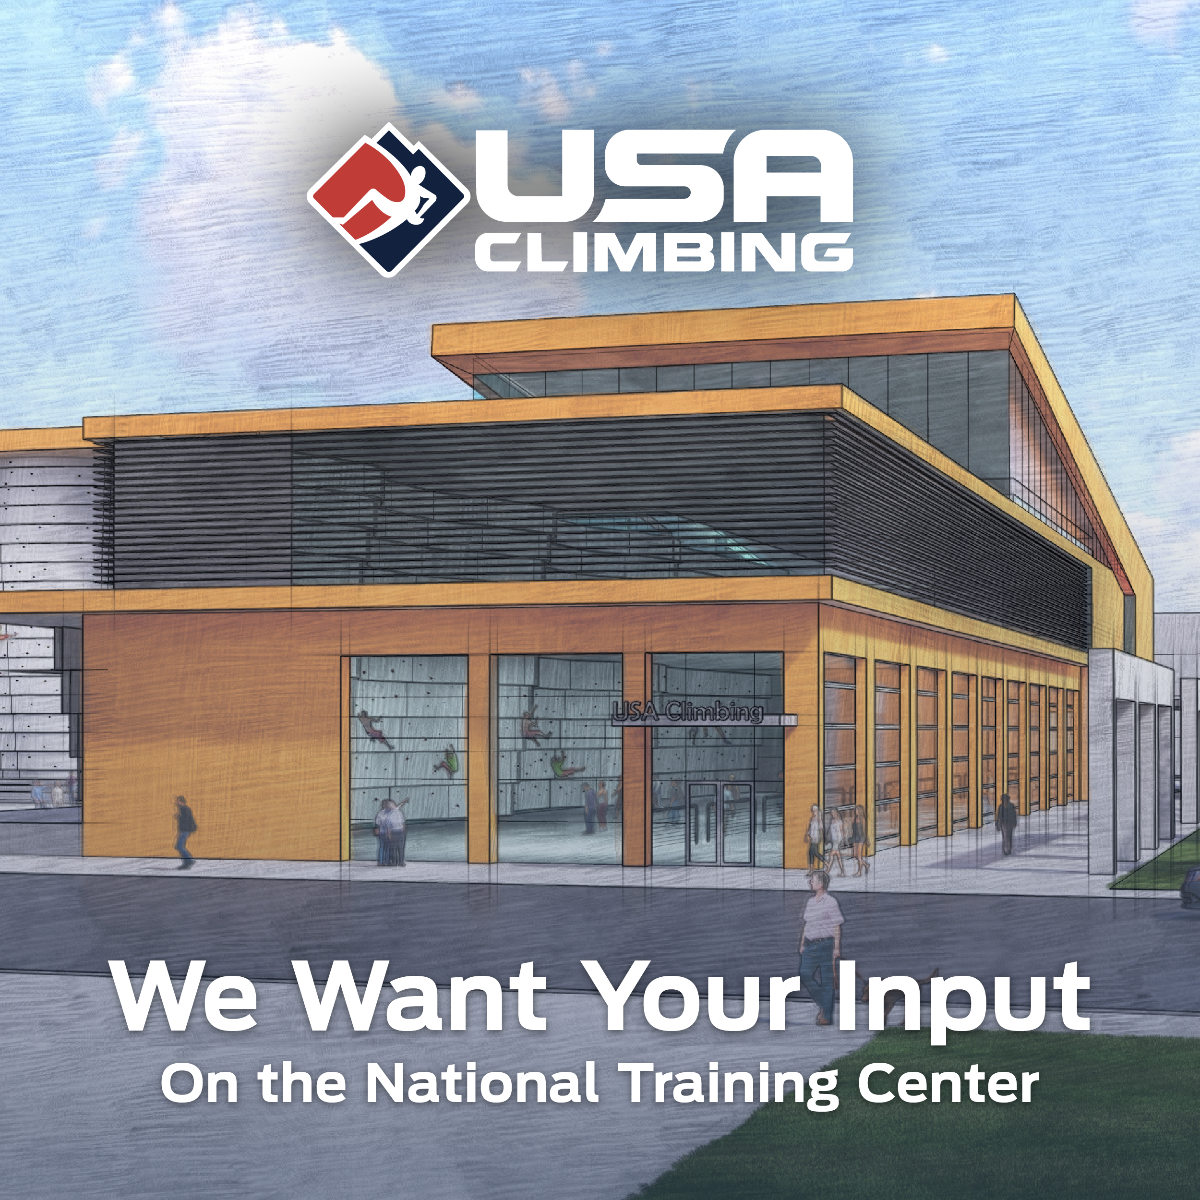 image of USA climbing training center